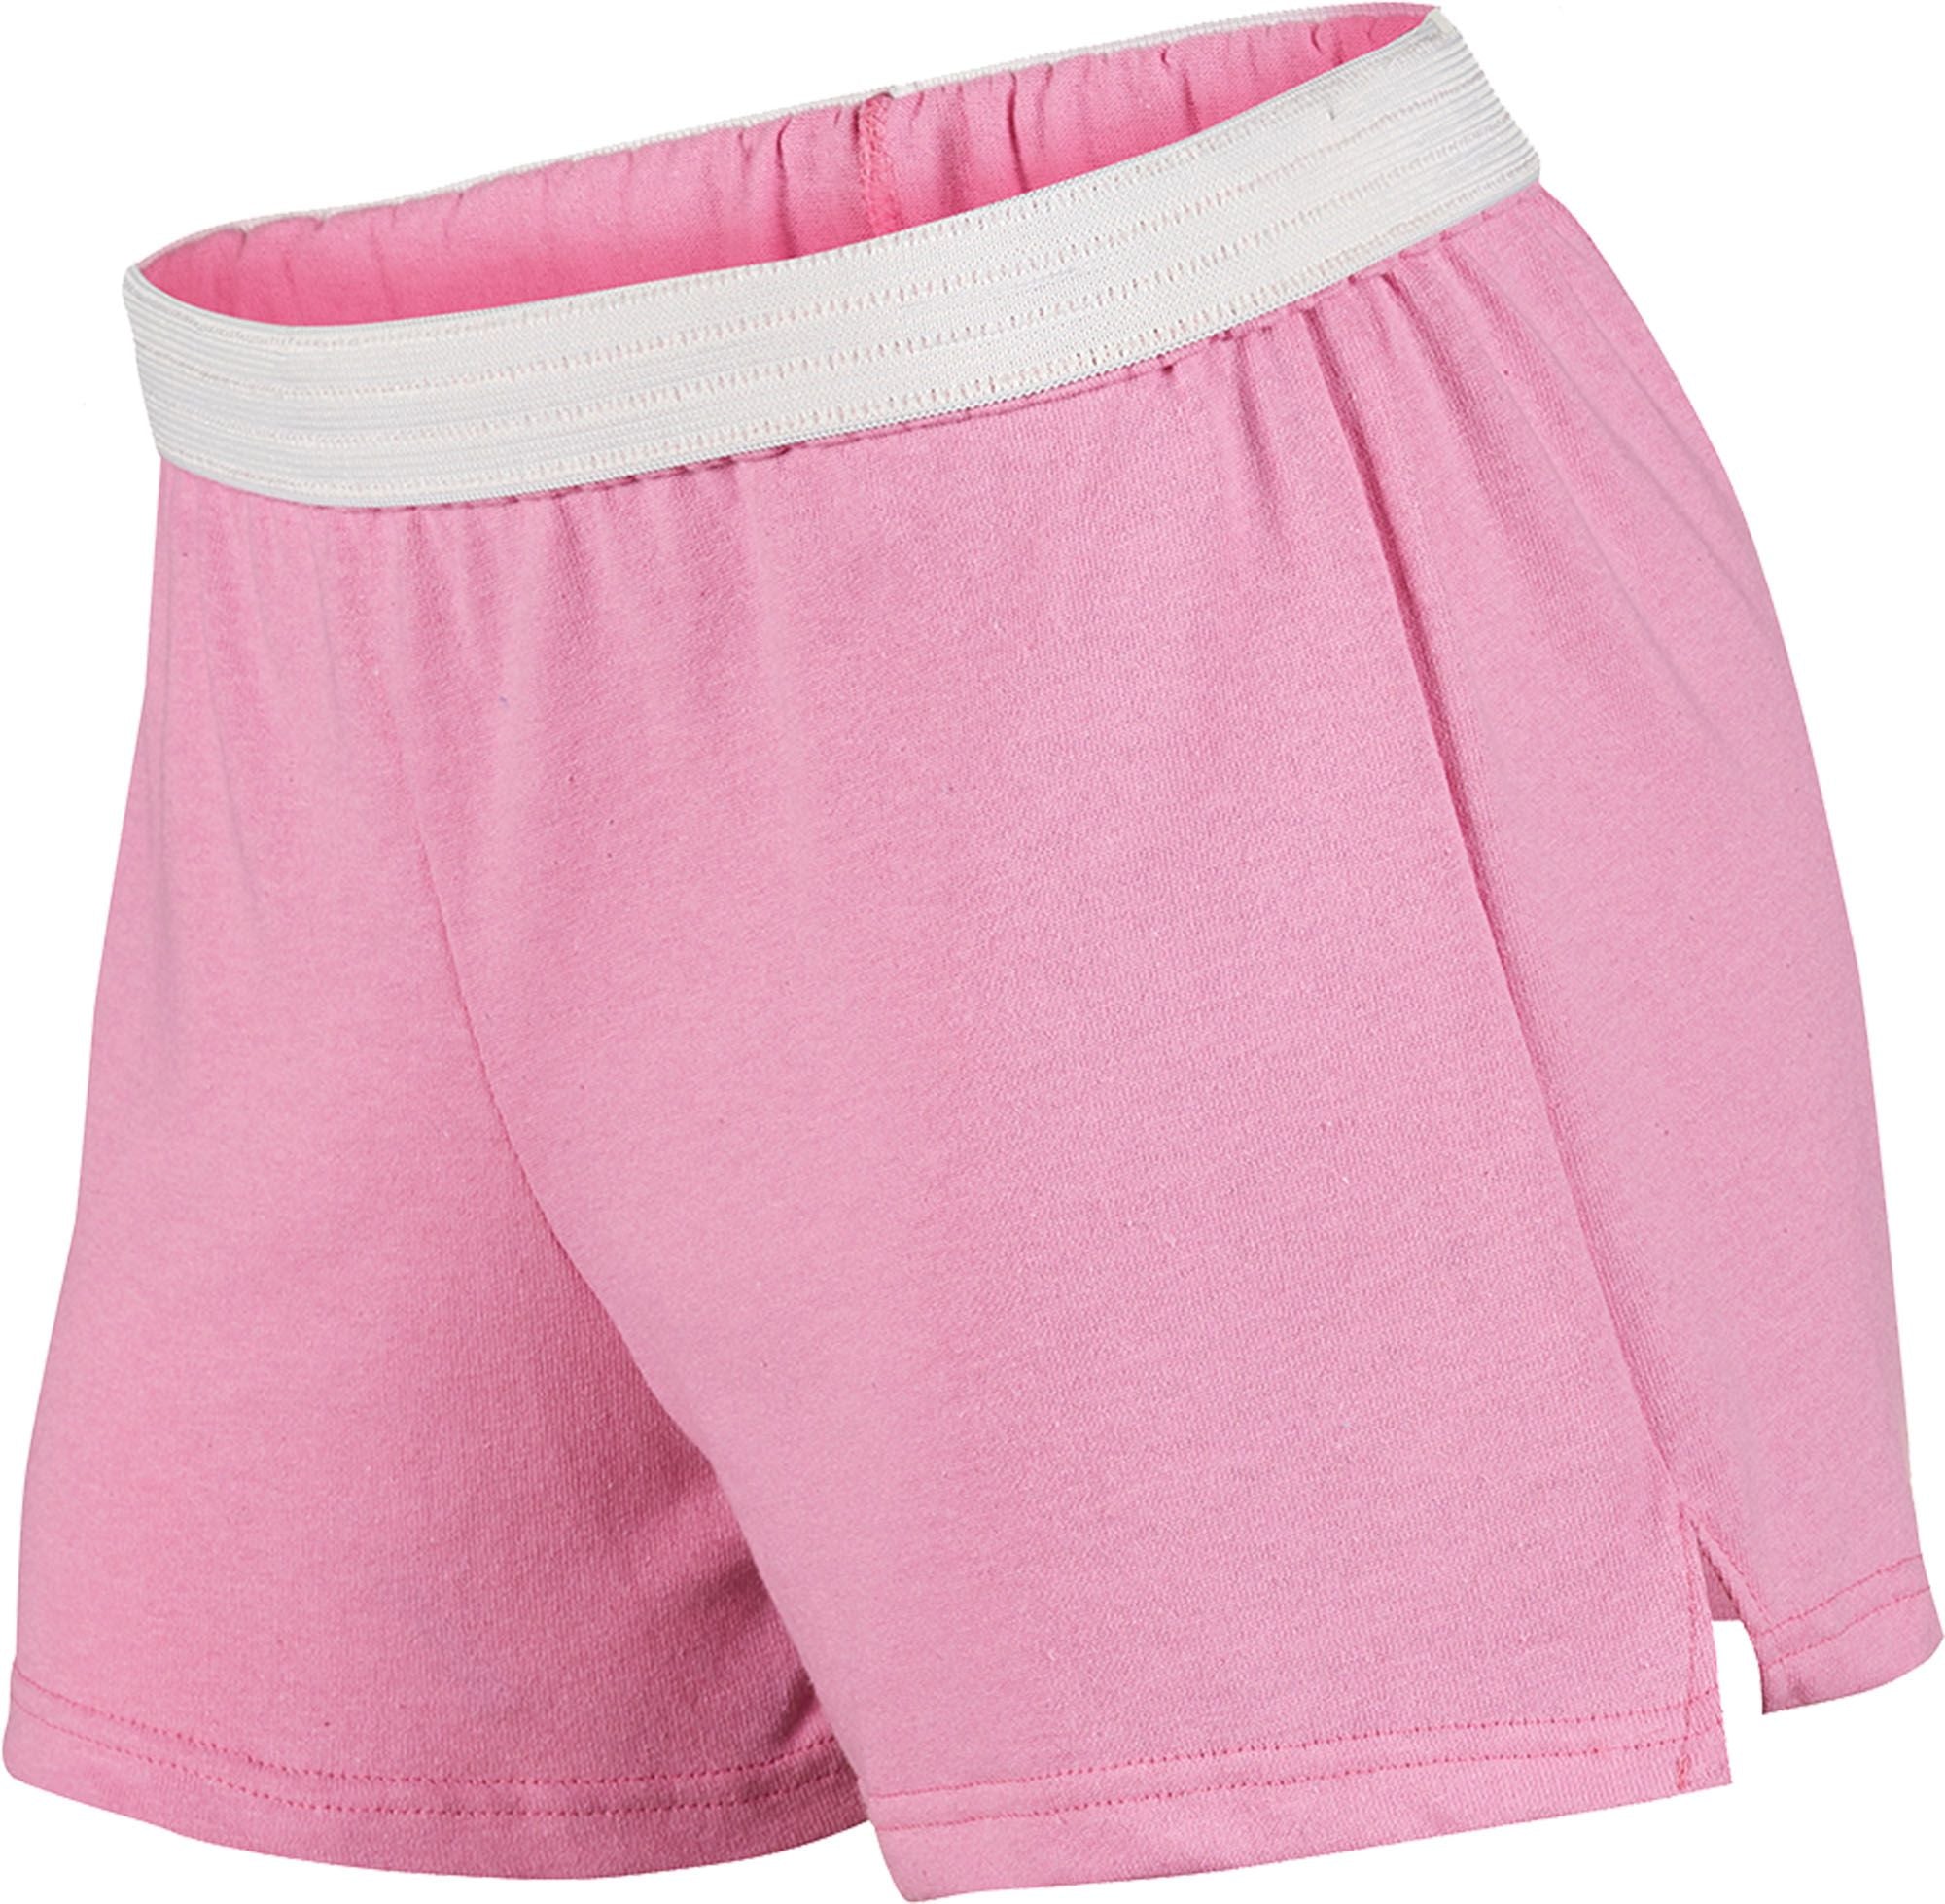 Soffe Women's Juniors' Cheer Shorts